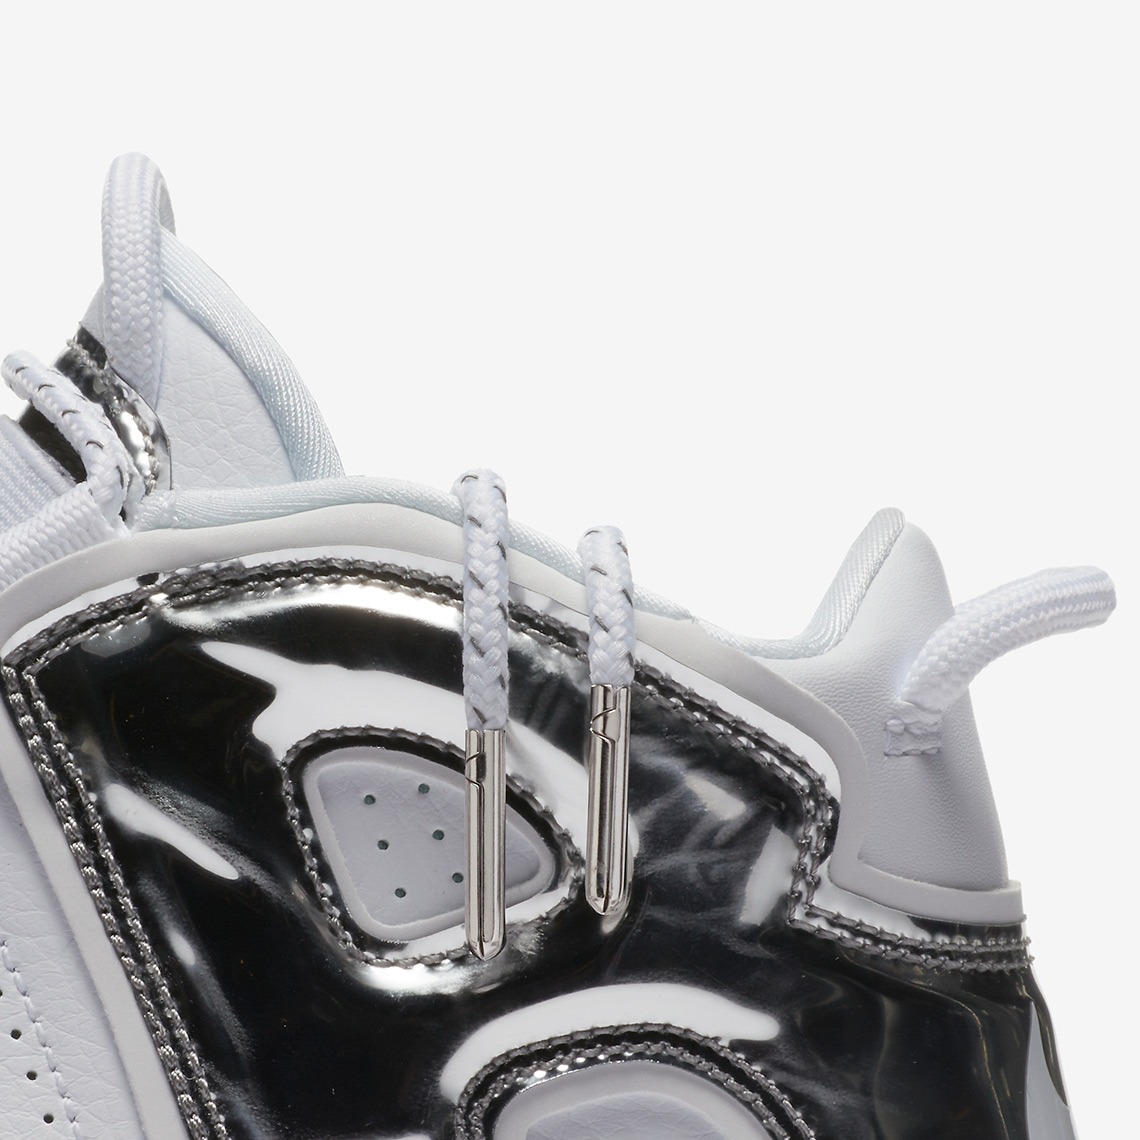 Maoo Custom Gallery - Complete 🎉🎉 🚧 Nike Air More Uptempo Camo 🚧  ⋆ส⋆ว⋆ย⋆เ⋆นี๊⋆ย⋆บ⋆ #custom #customsneaker #sneaker #adidas #n